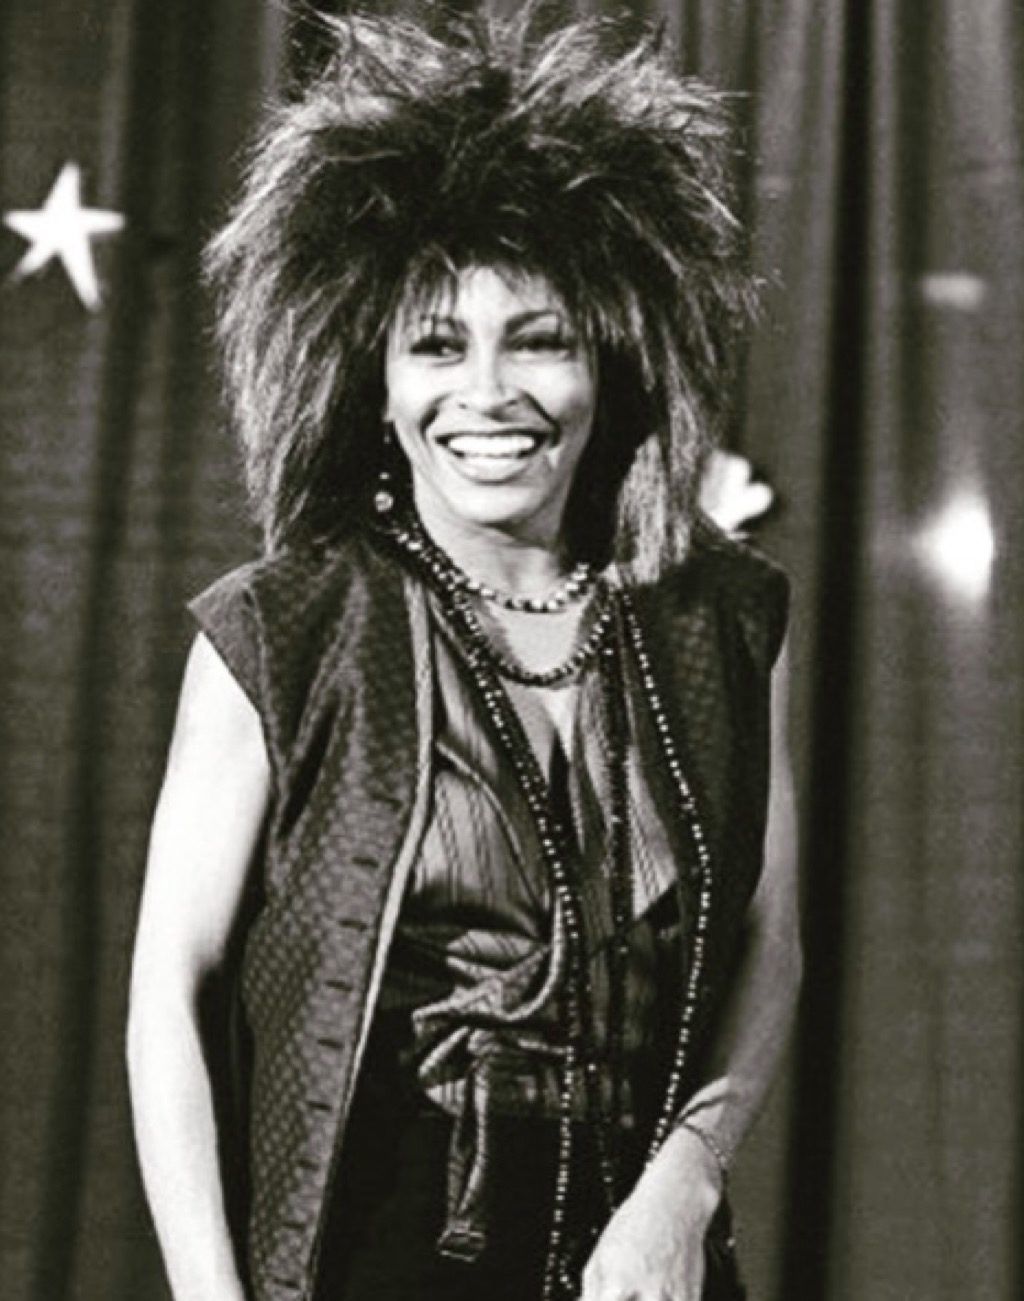 Rambut ikonik Tina Turner